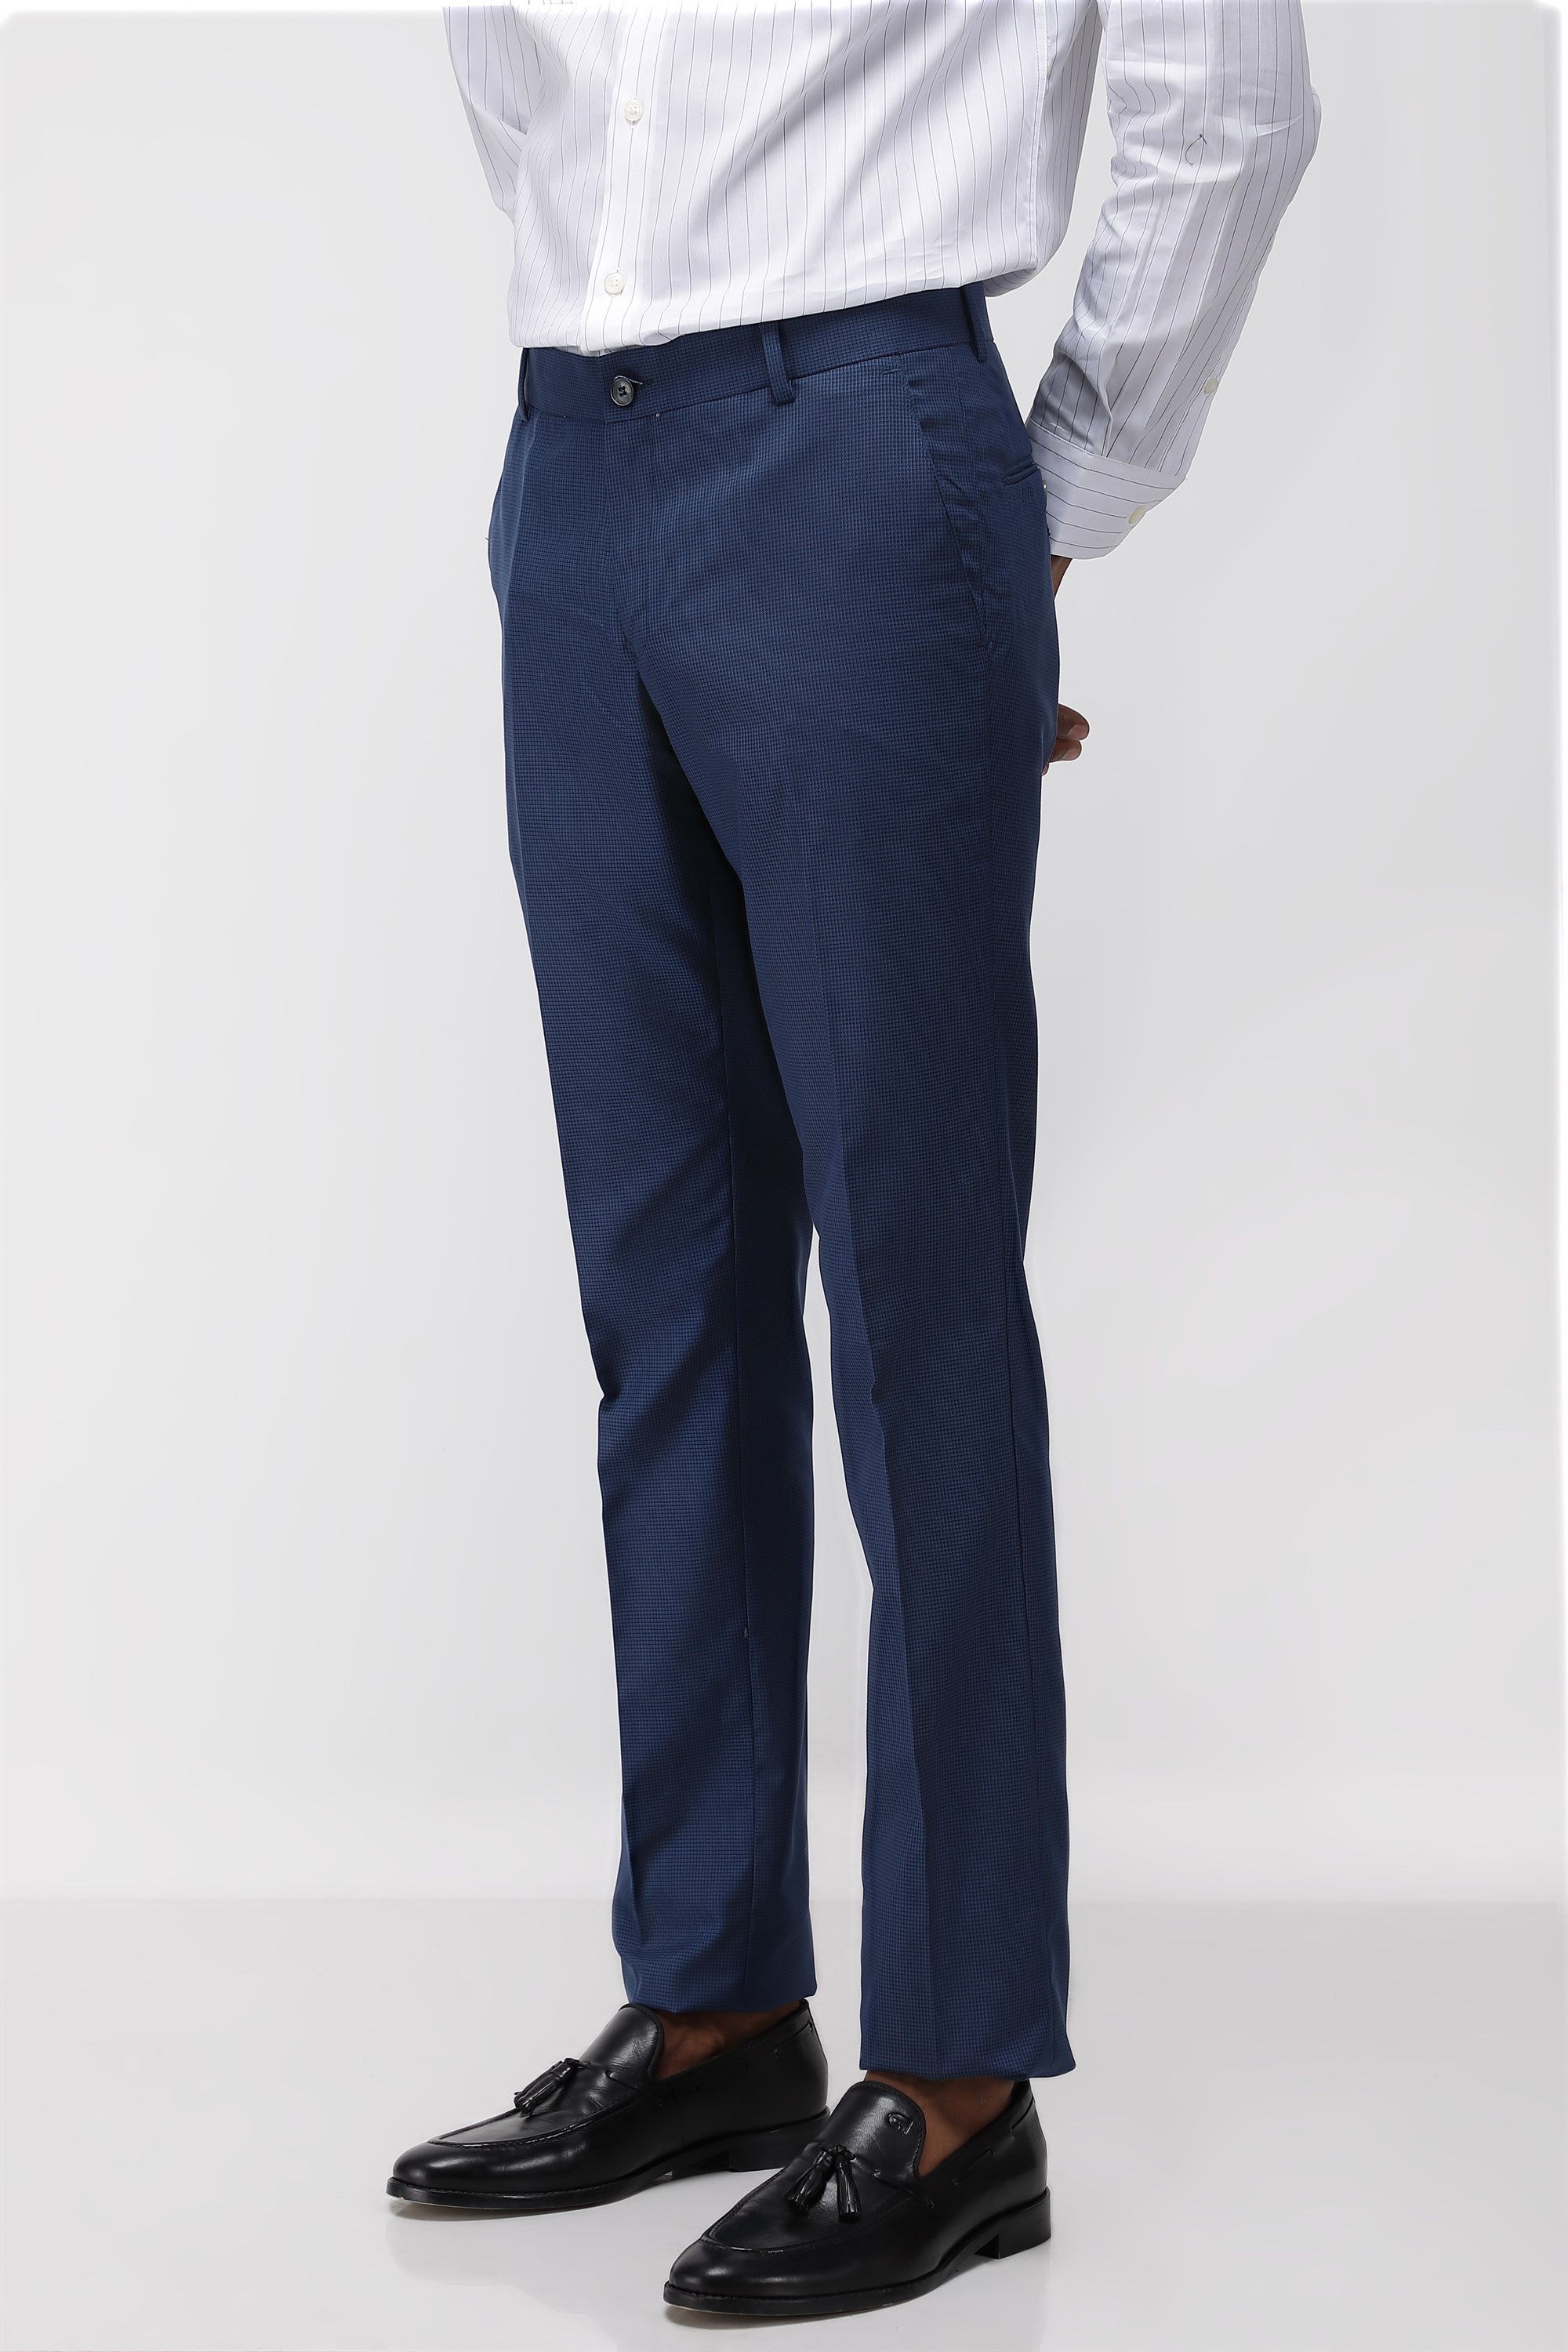 Buy Men Navy Textured Slim Fit Formal Trousers Online - 753385 | Peter  England